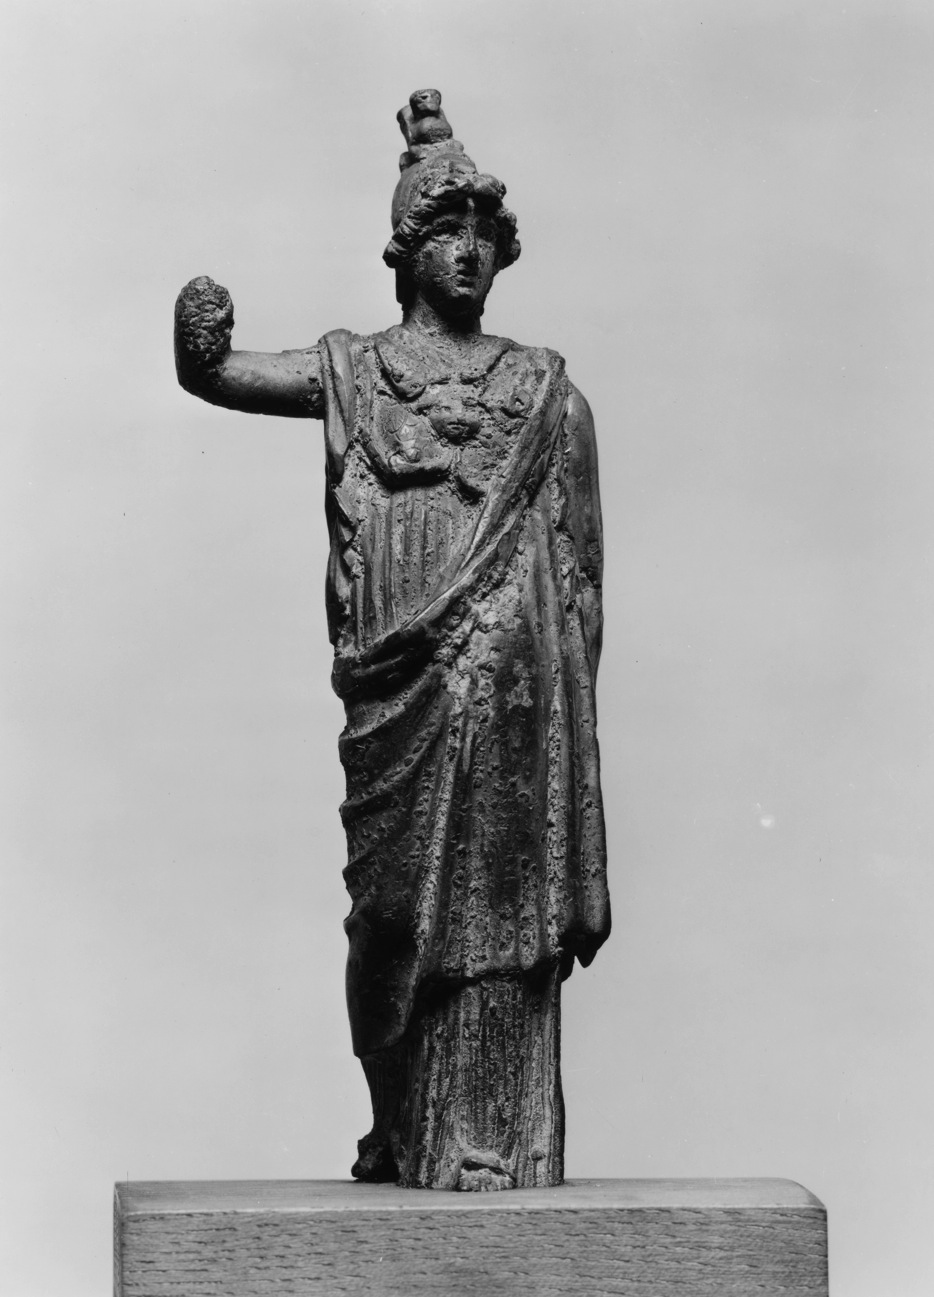 Image for Athena